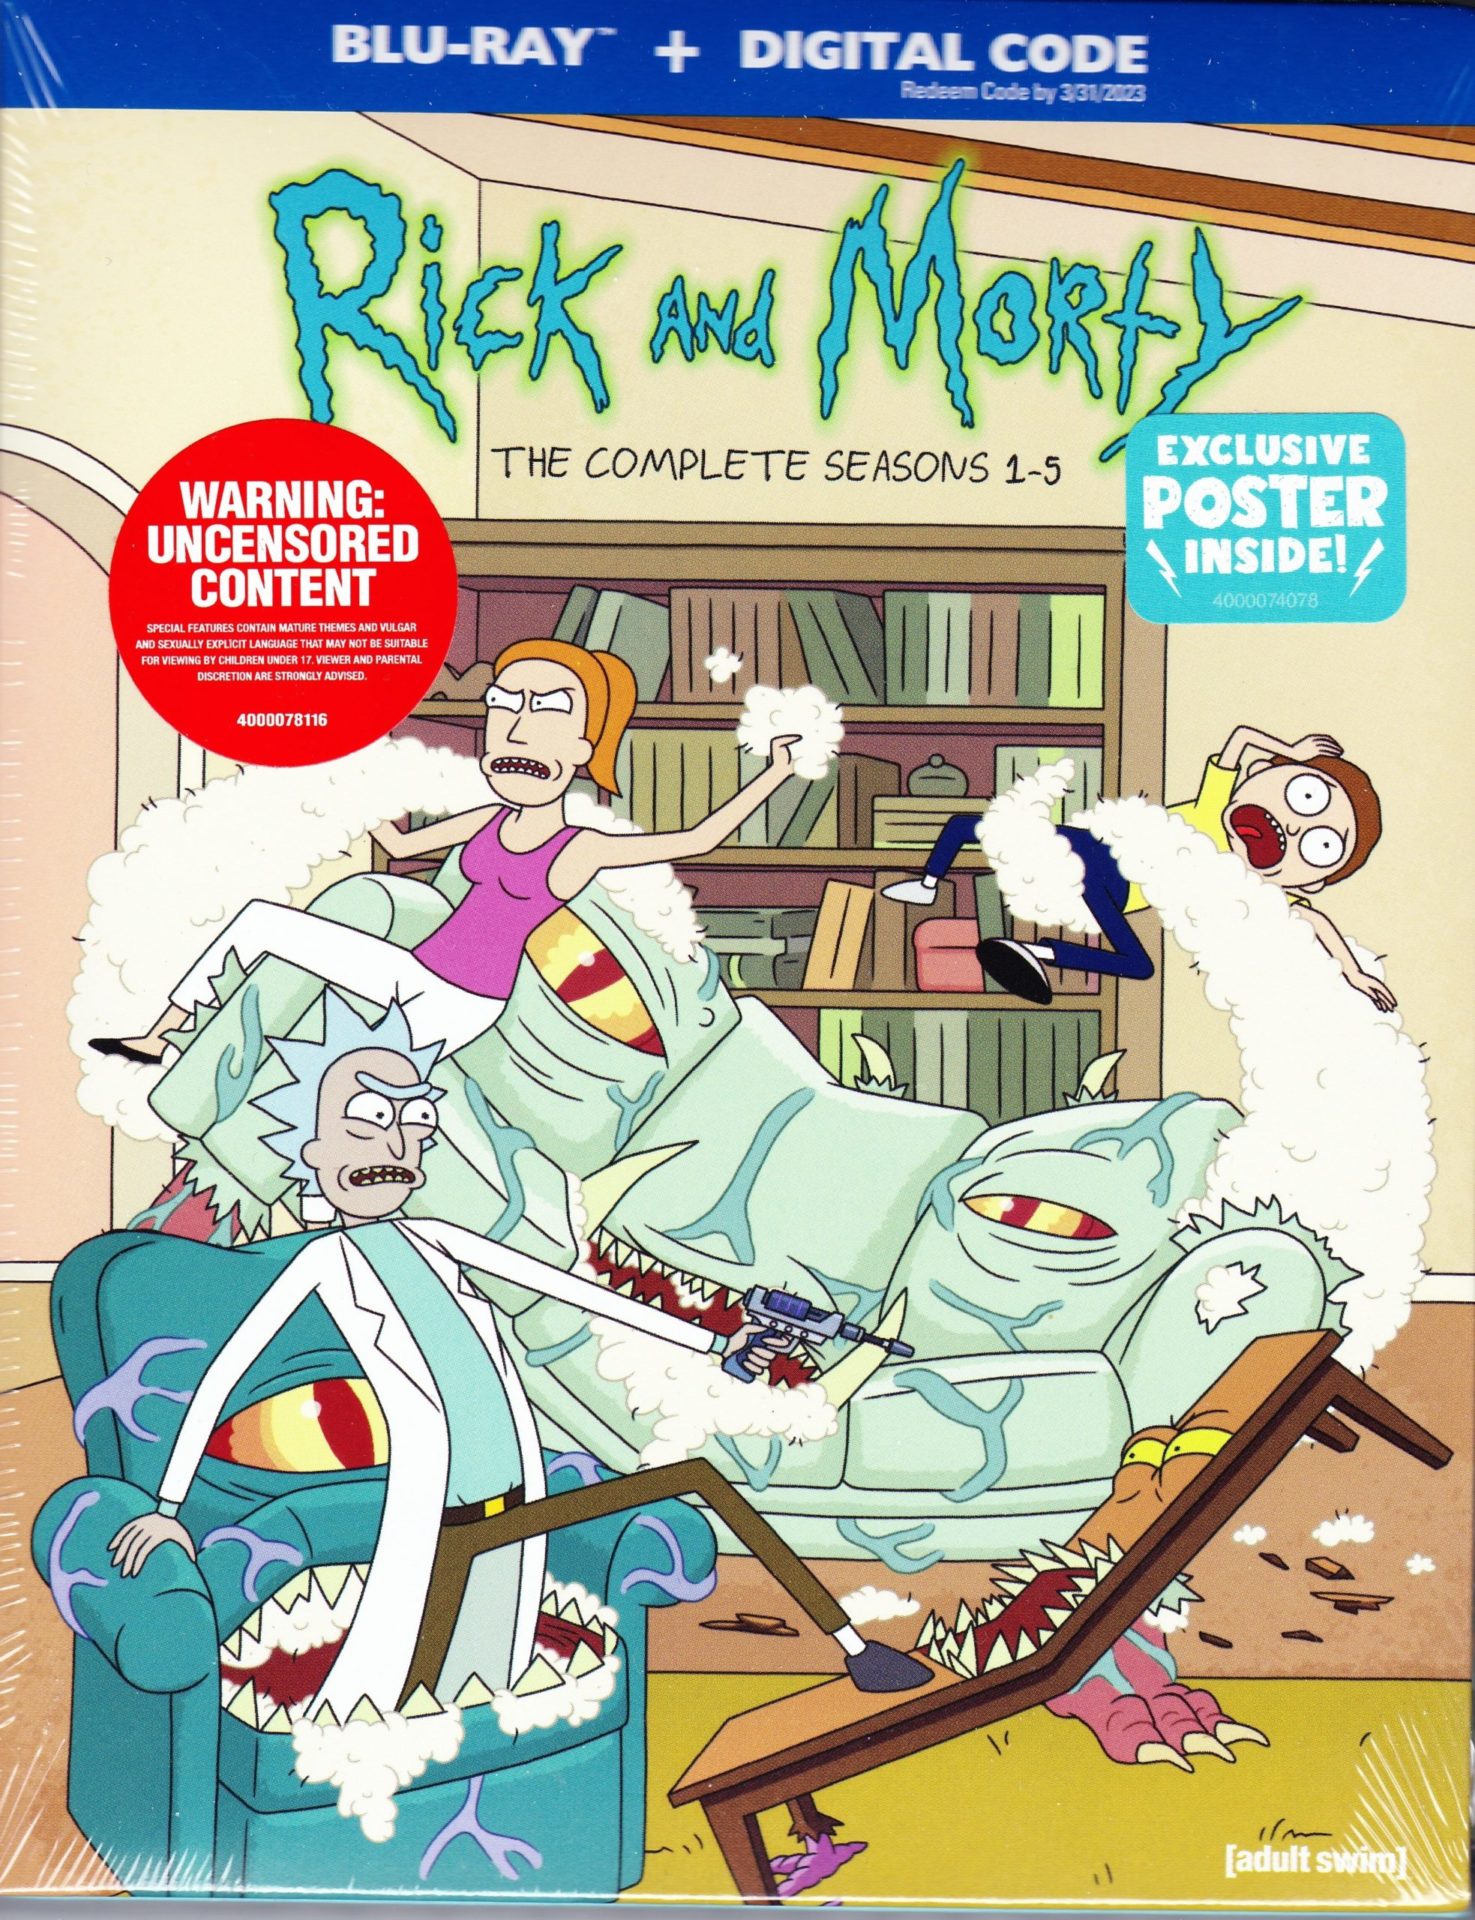 10 designers reimagine Rick and Morty